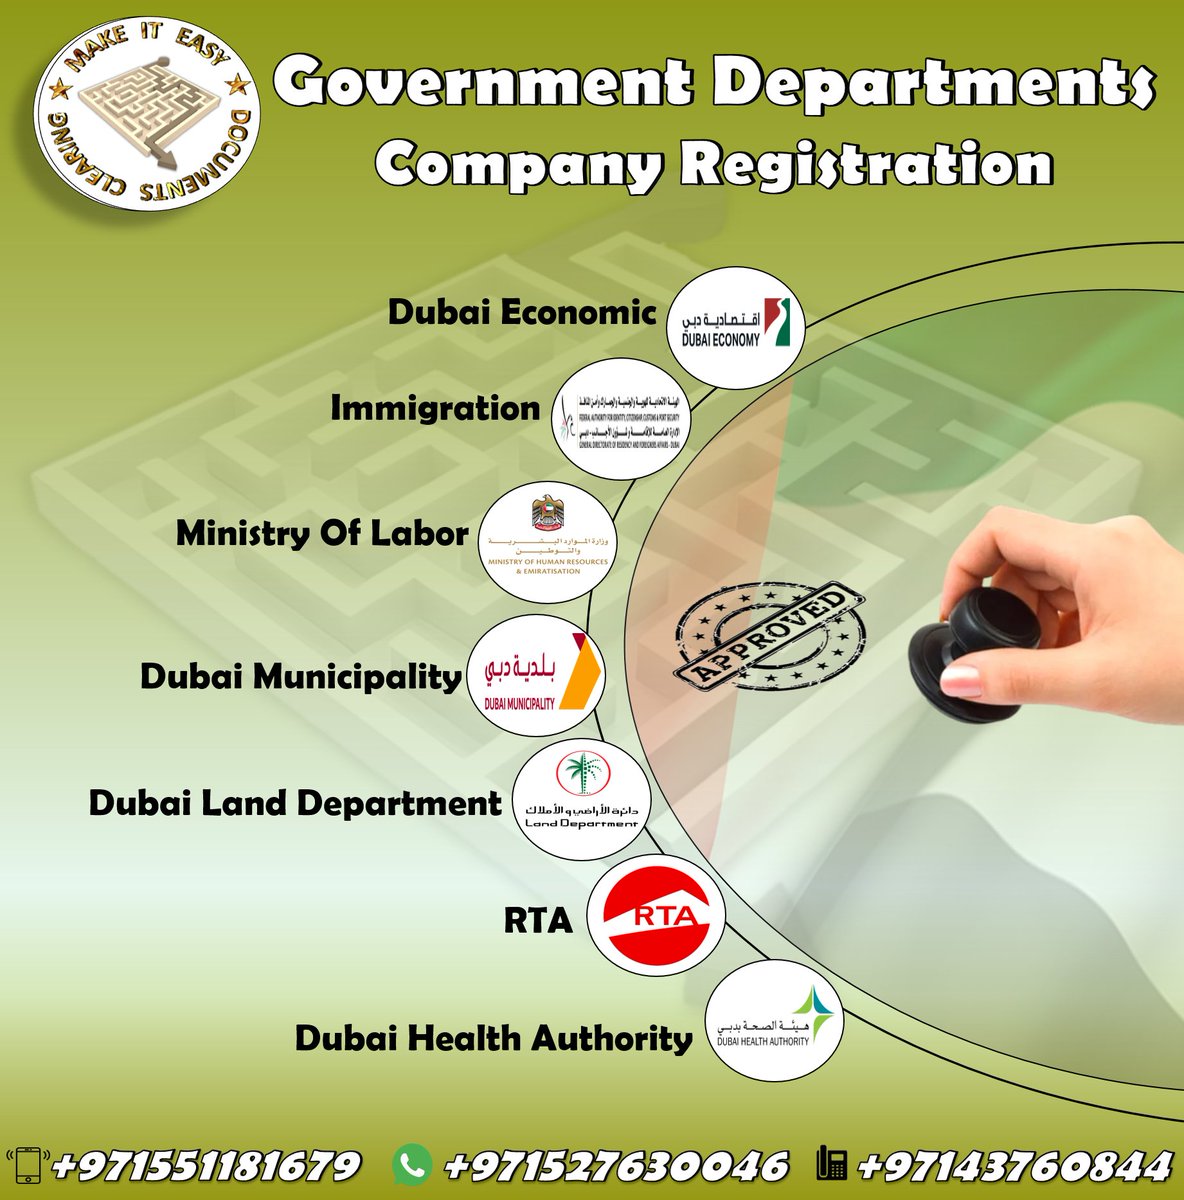 #MAKE_IT_EASY_DOCUMENTS_CLEARING

#Government_Departments_Company_Registration

#تسجيل_شركات_في_الدوائر_الحكومية